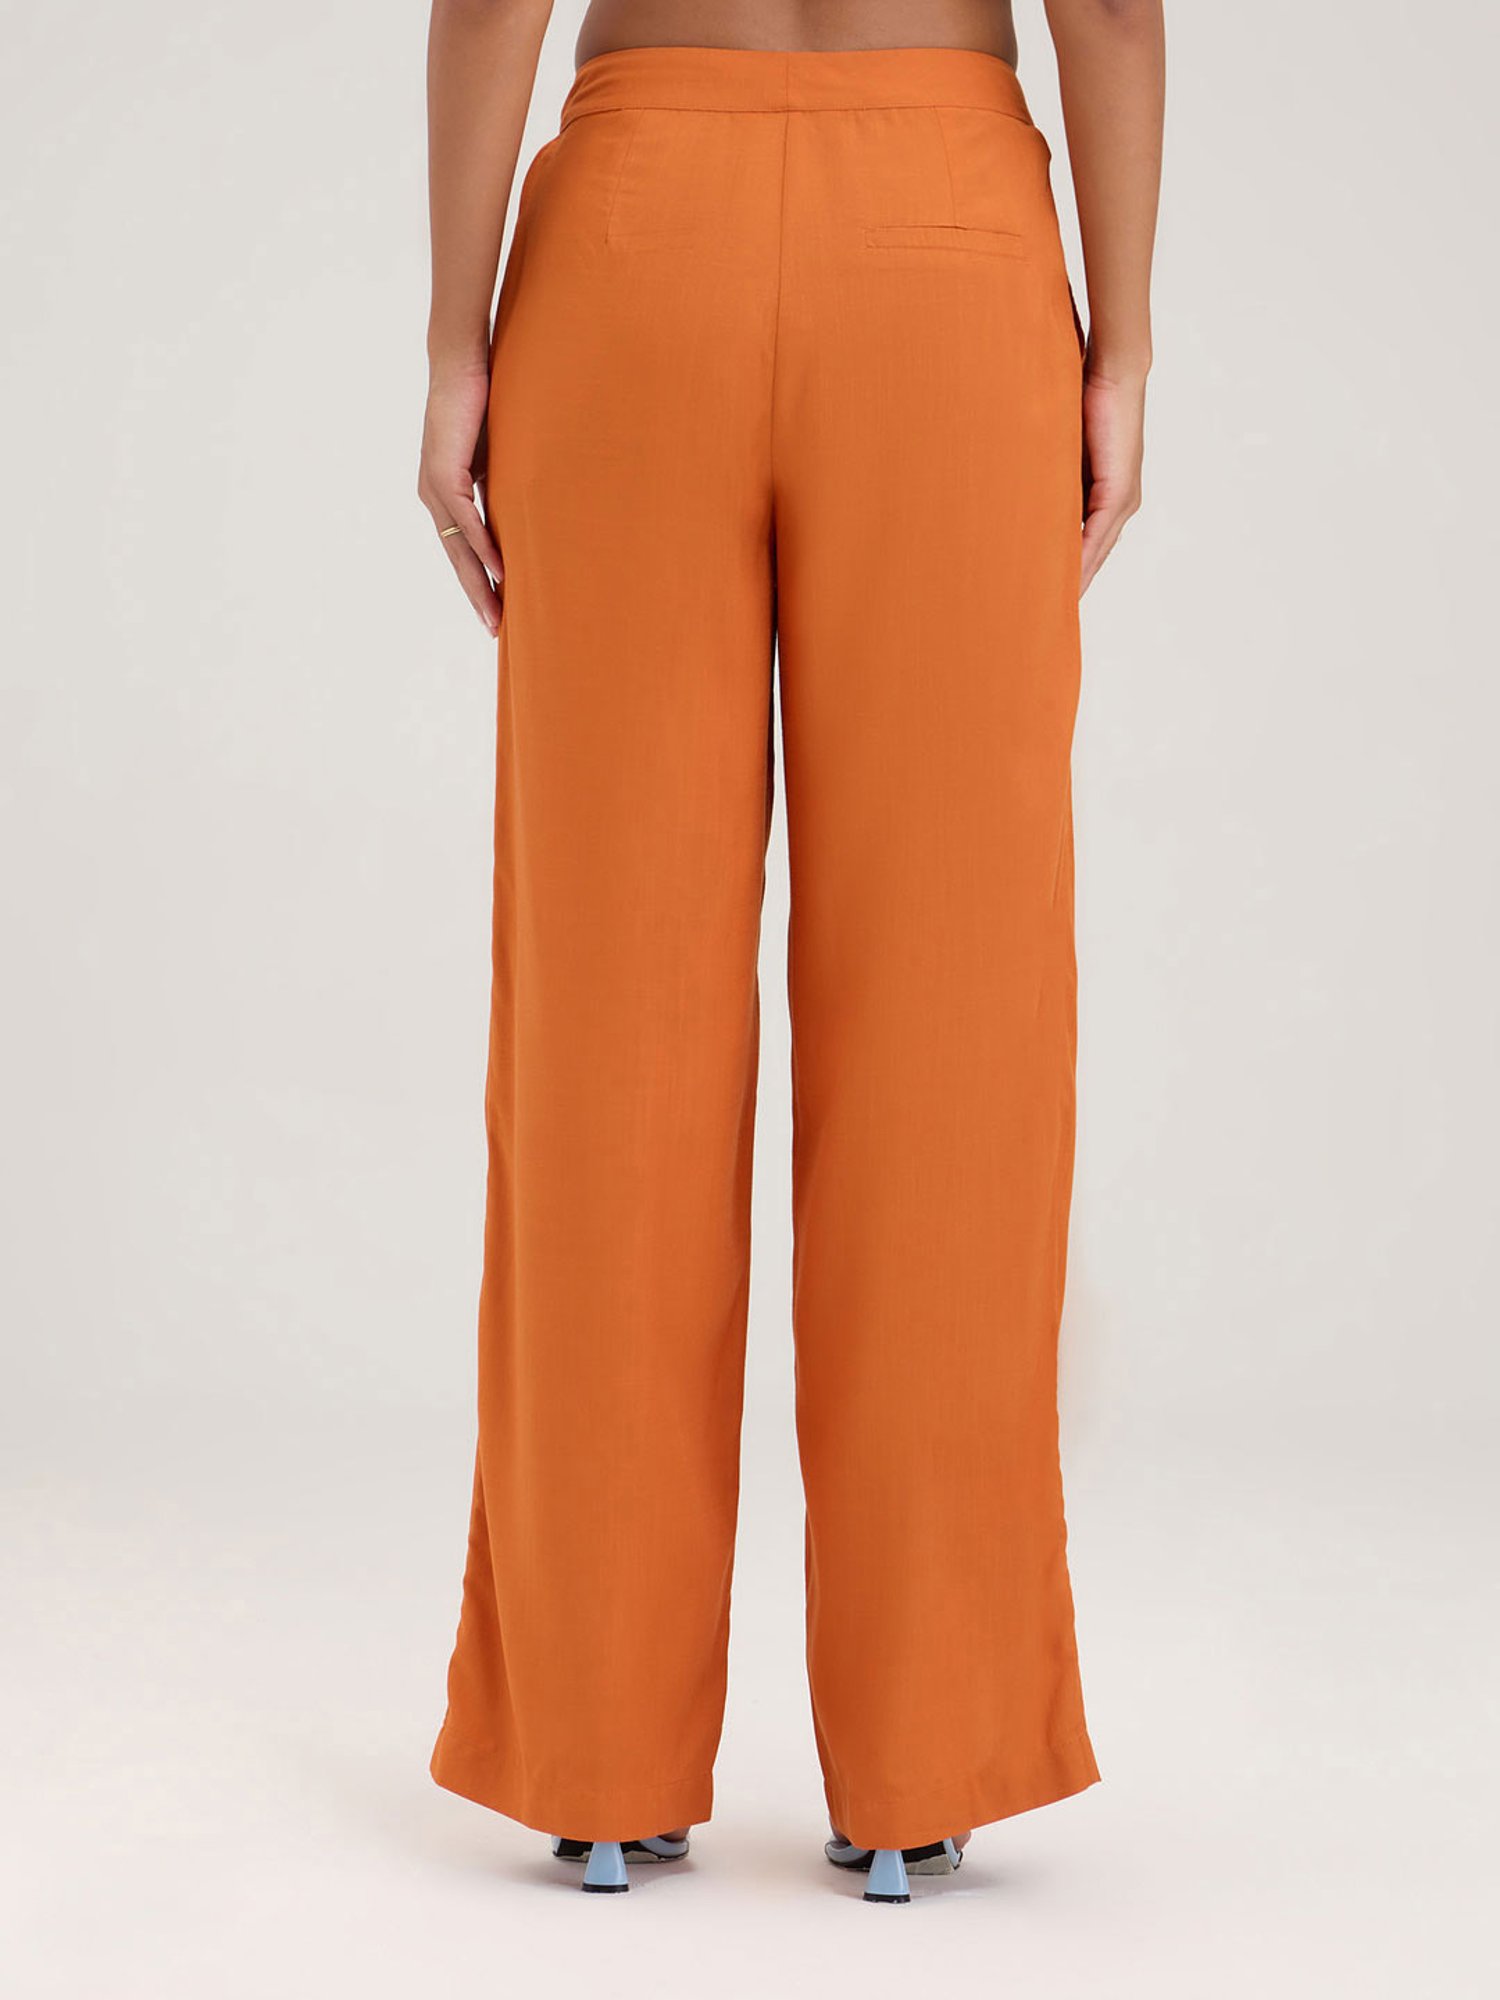 Women's Orange Viscose Solid Trousers